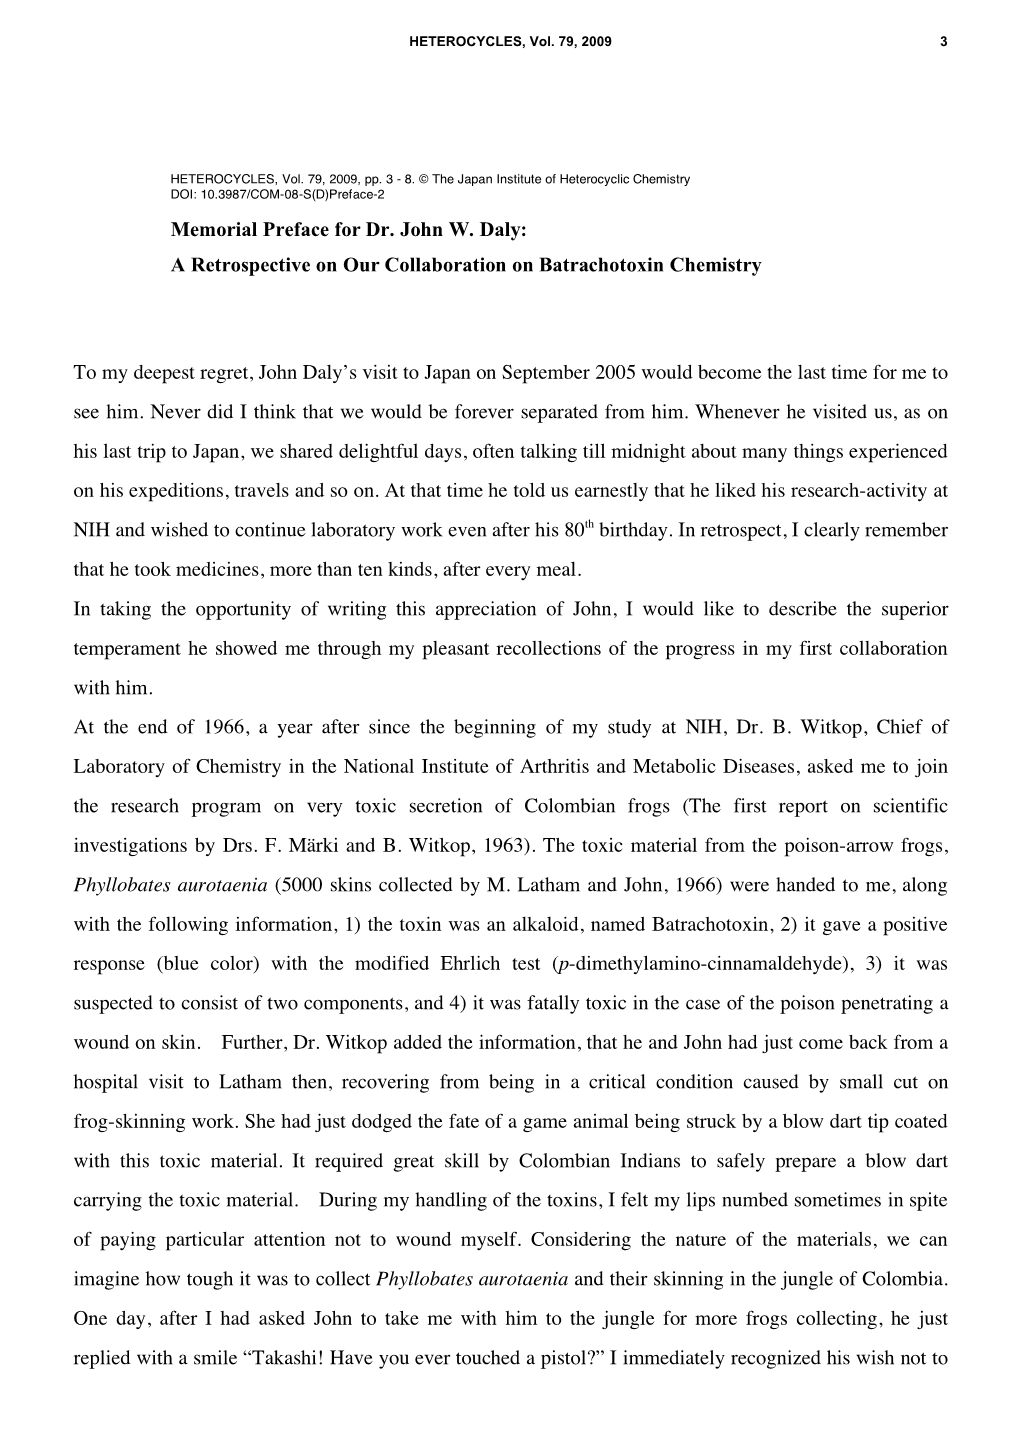 Memorial Preface for Dr. John W. Daly: a Retrospective on Our Collaboration on Batrachotoxin Chemistry